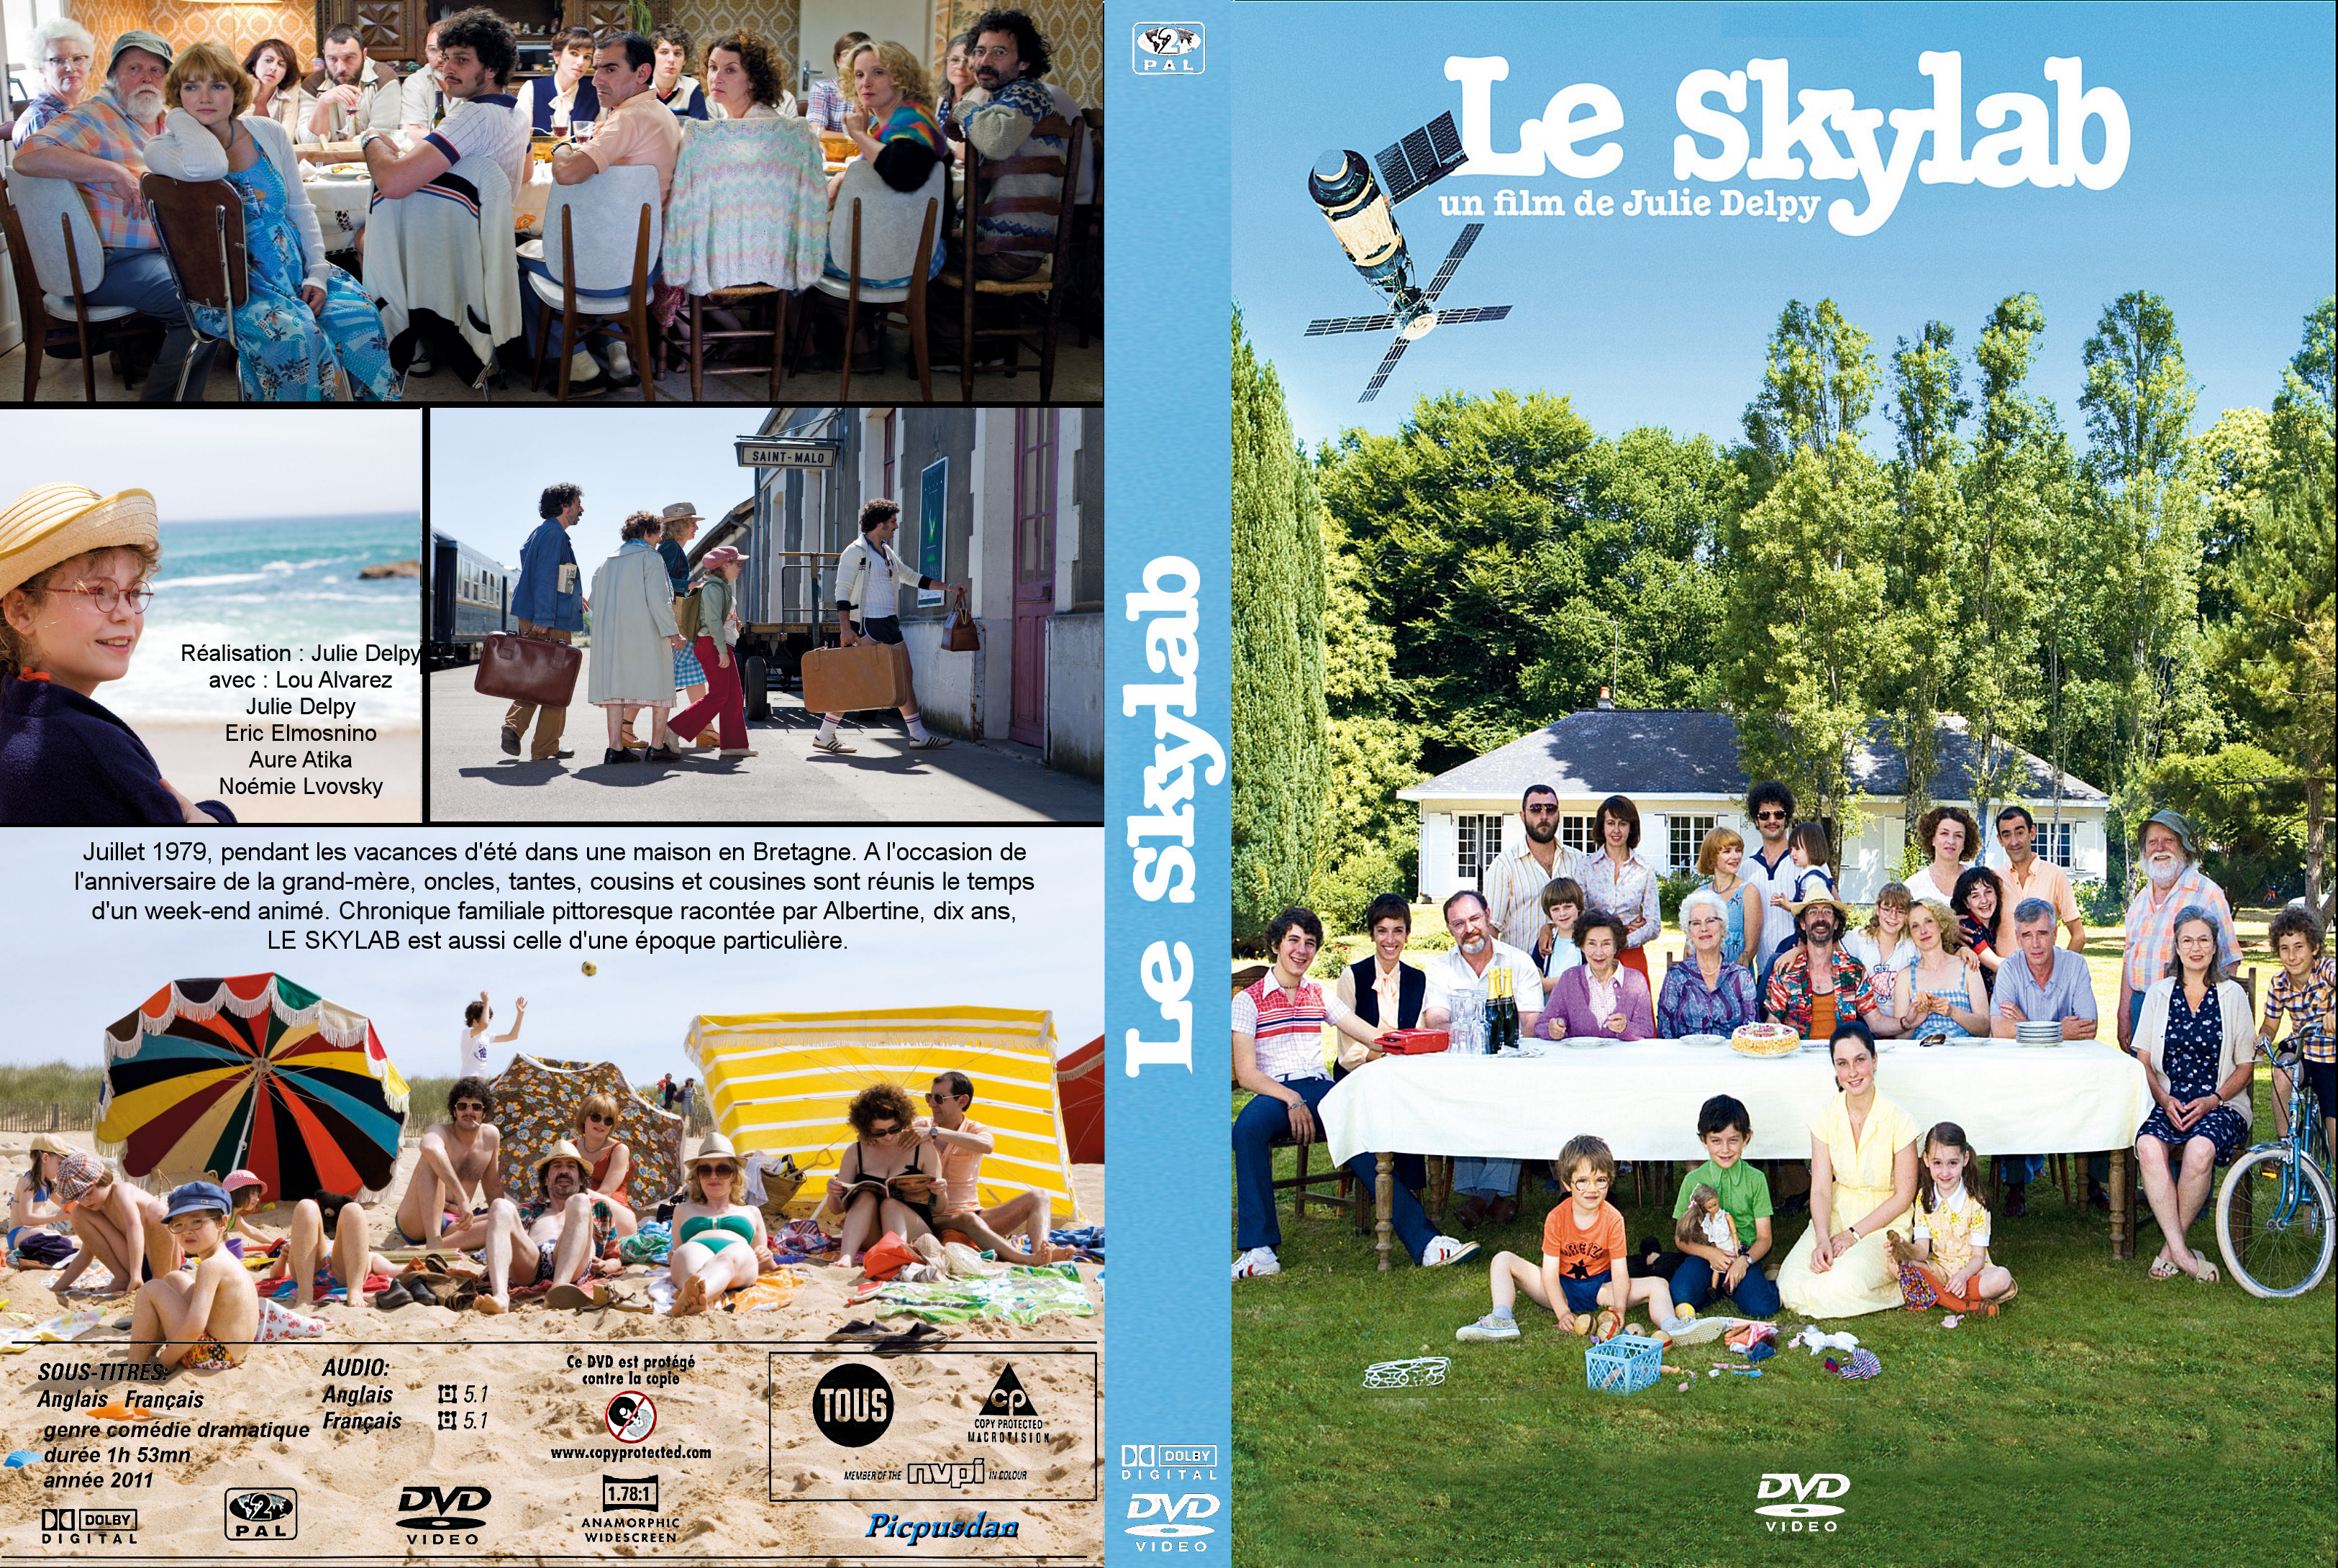 Jaquette DVD Le Skylab custom